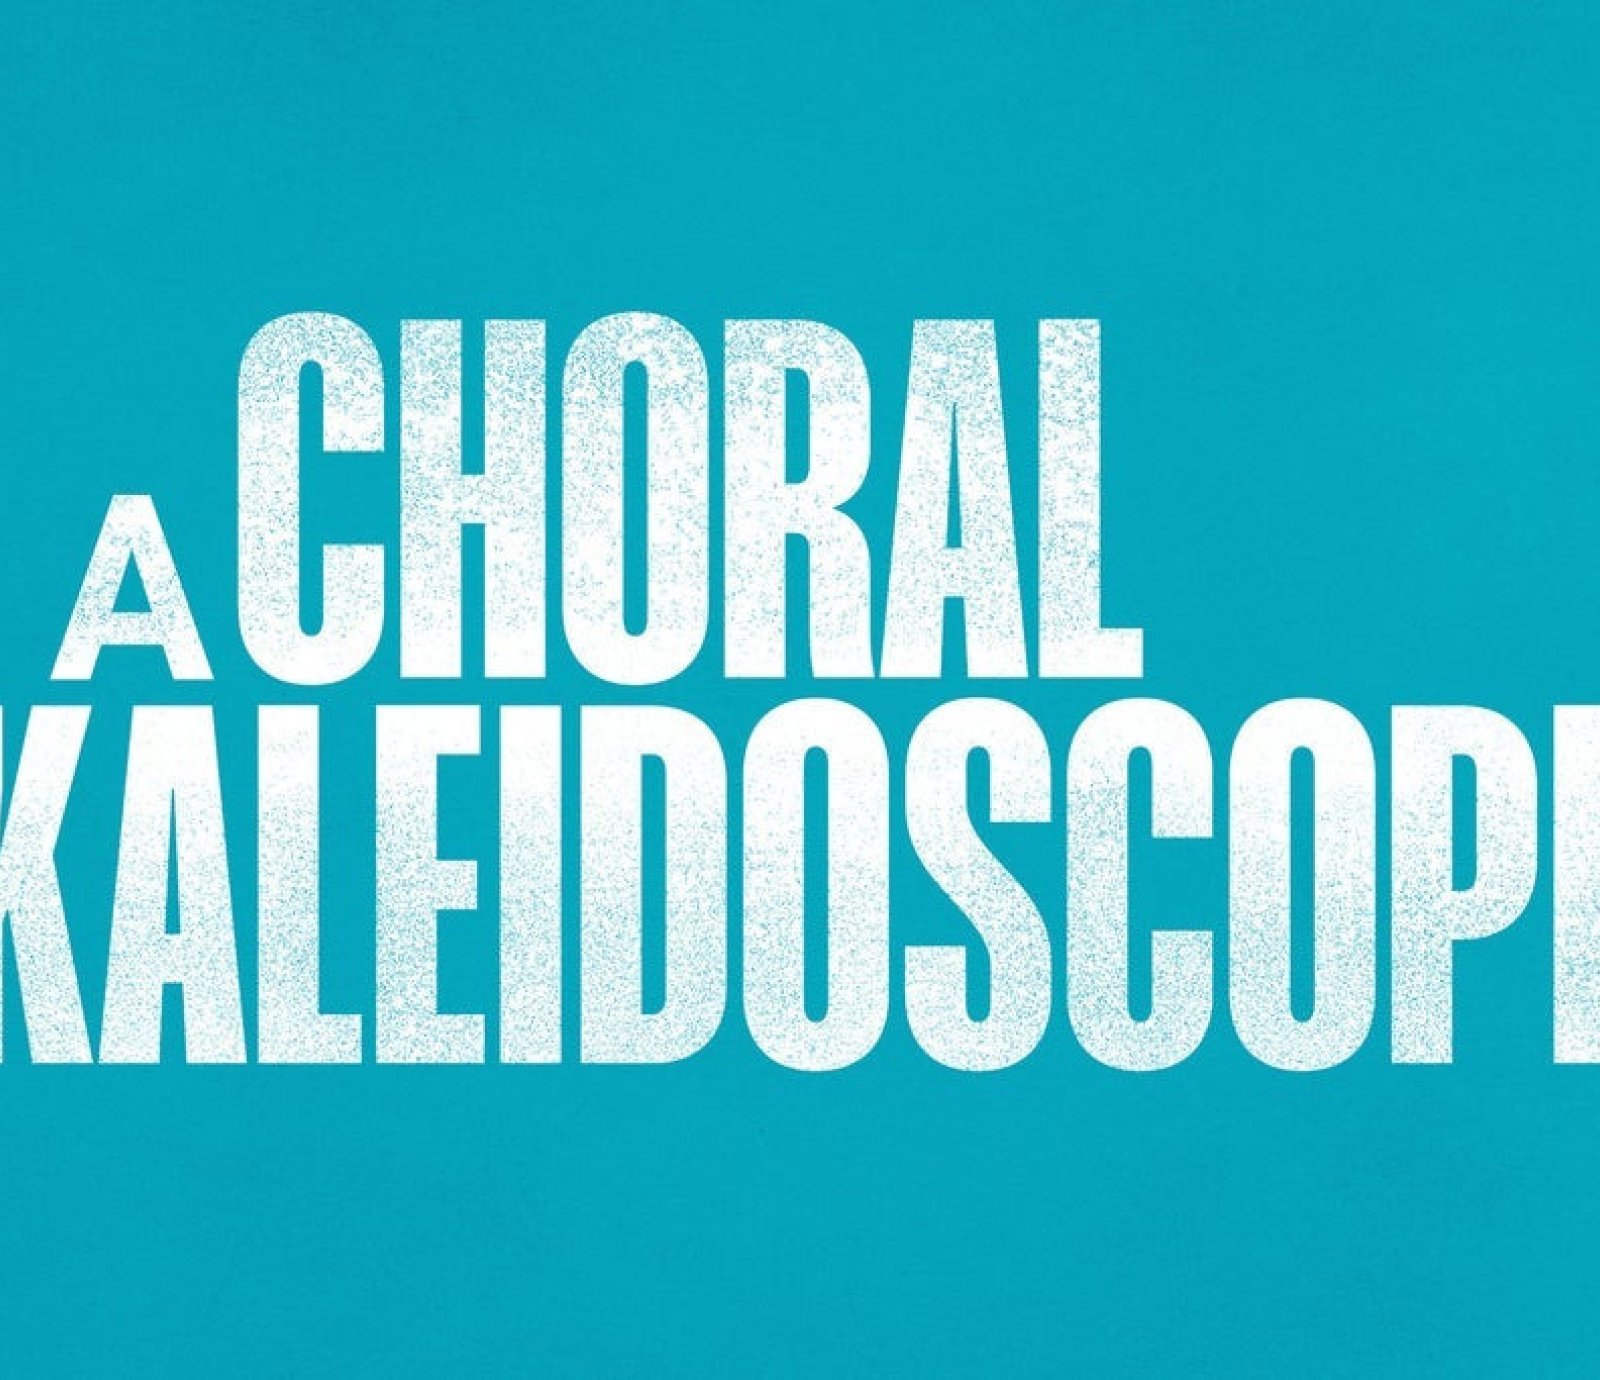 A Choral Kaleidoscope